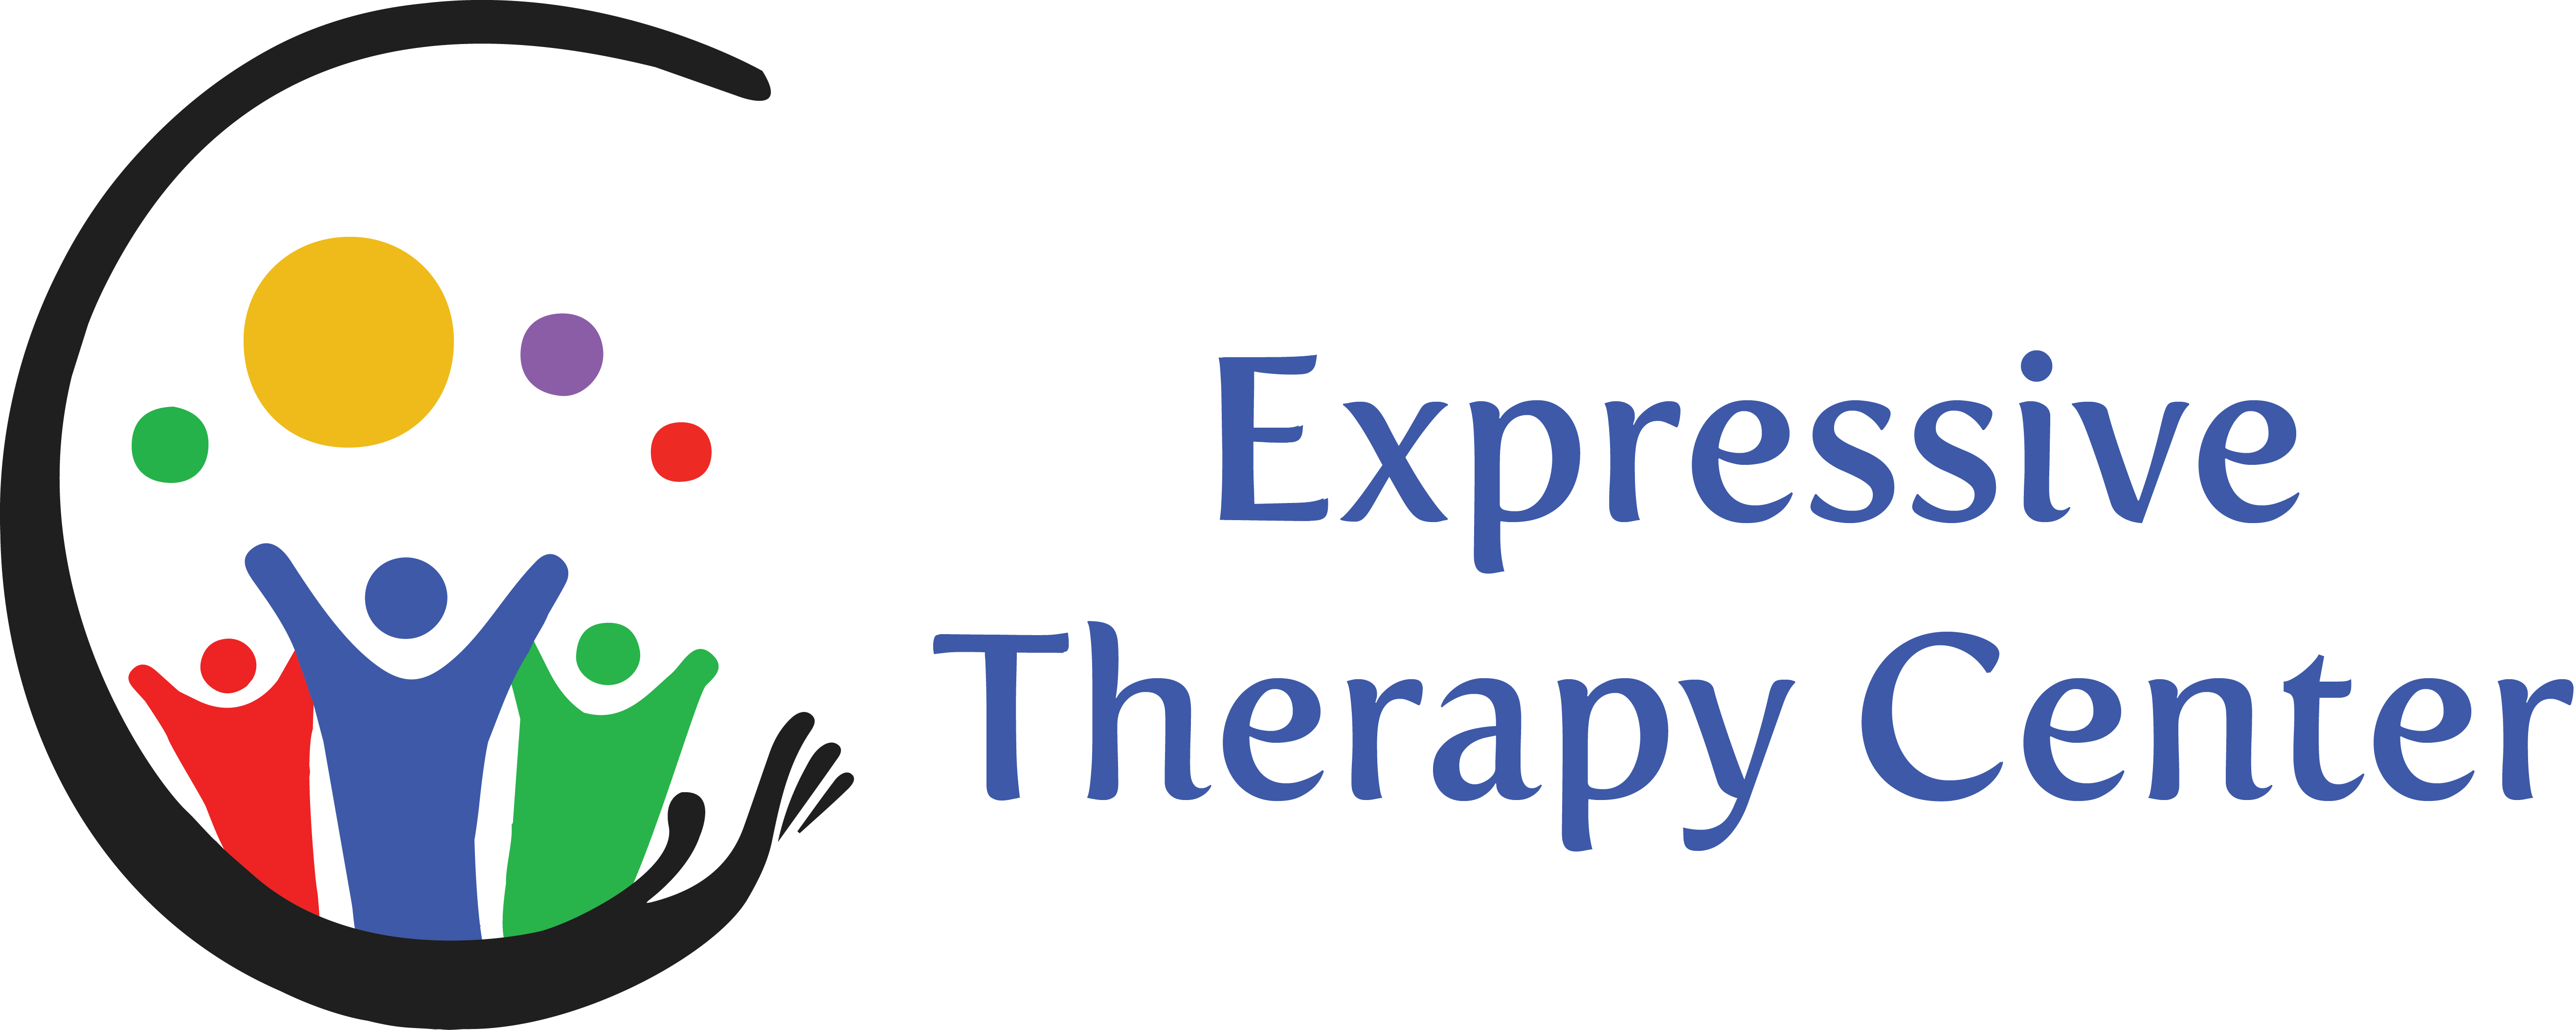 Logo Expressive Therapy Center - Expressive Therapy Center (5267x2105)